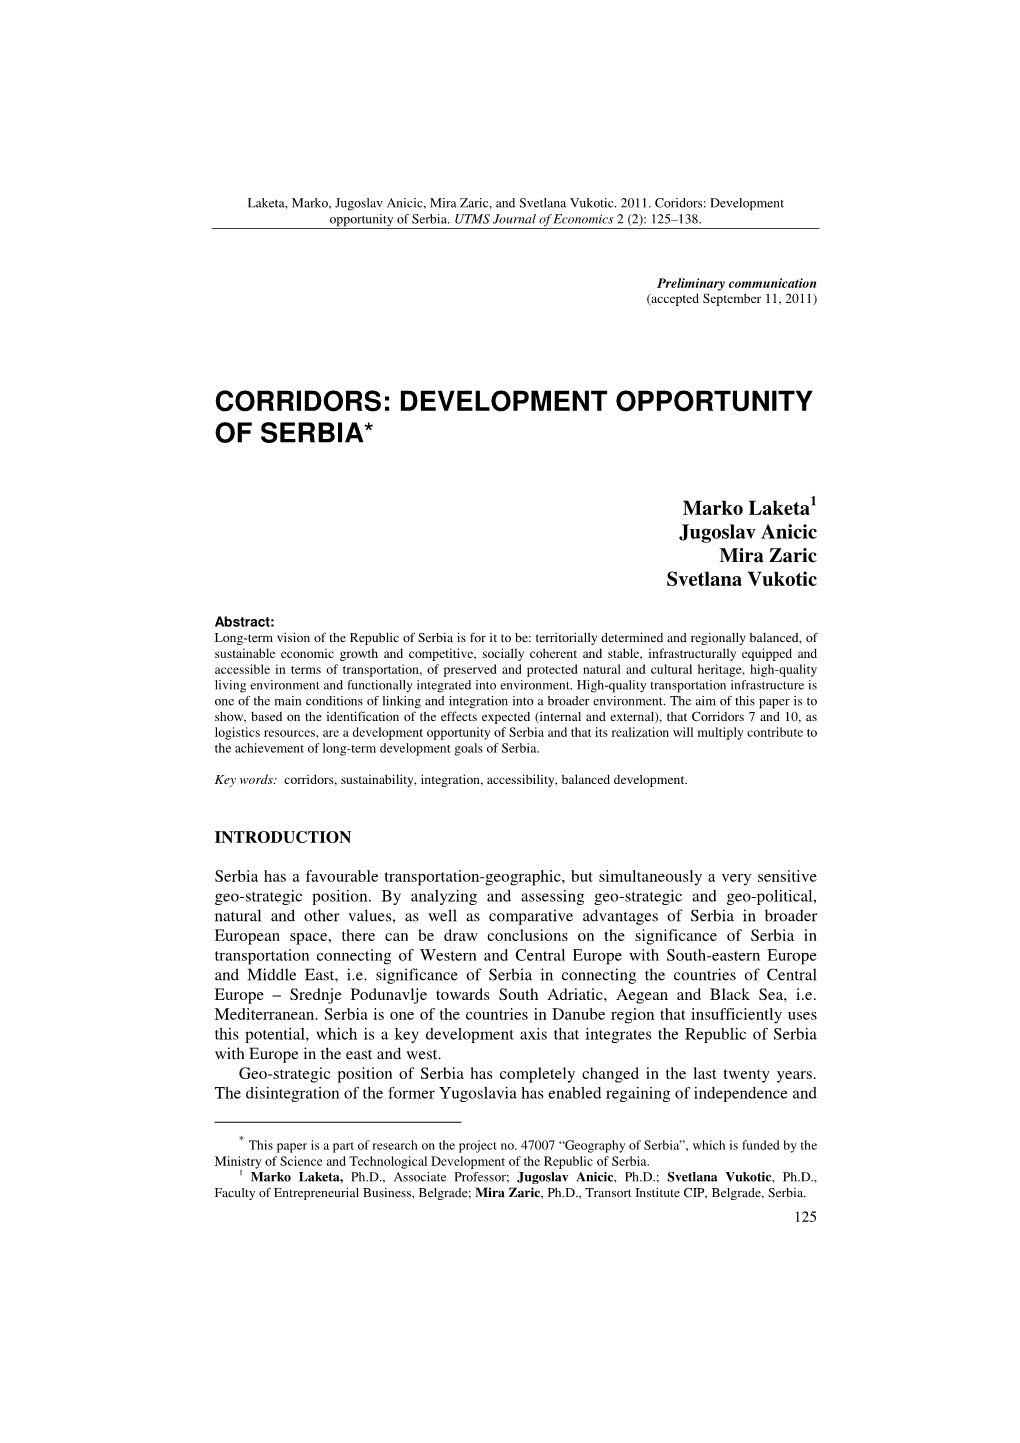 Corridors: Development Opportunity of Serbia *